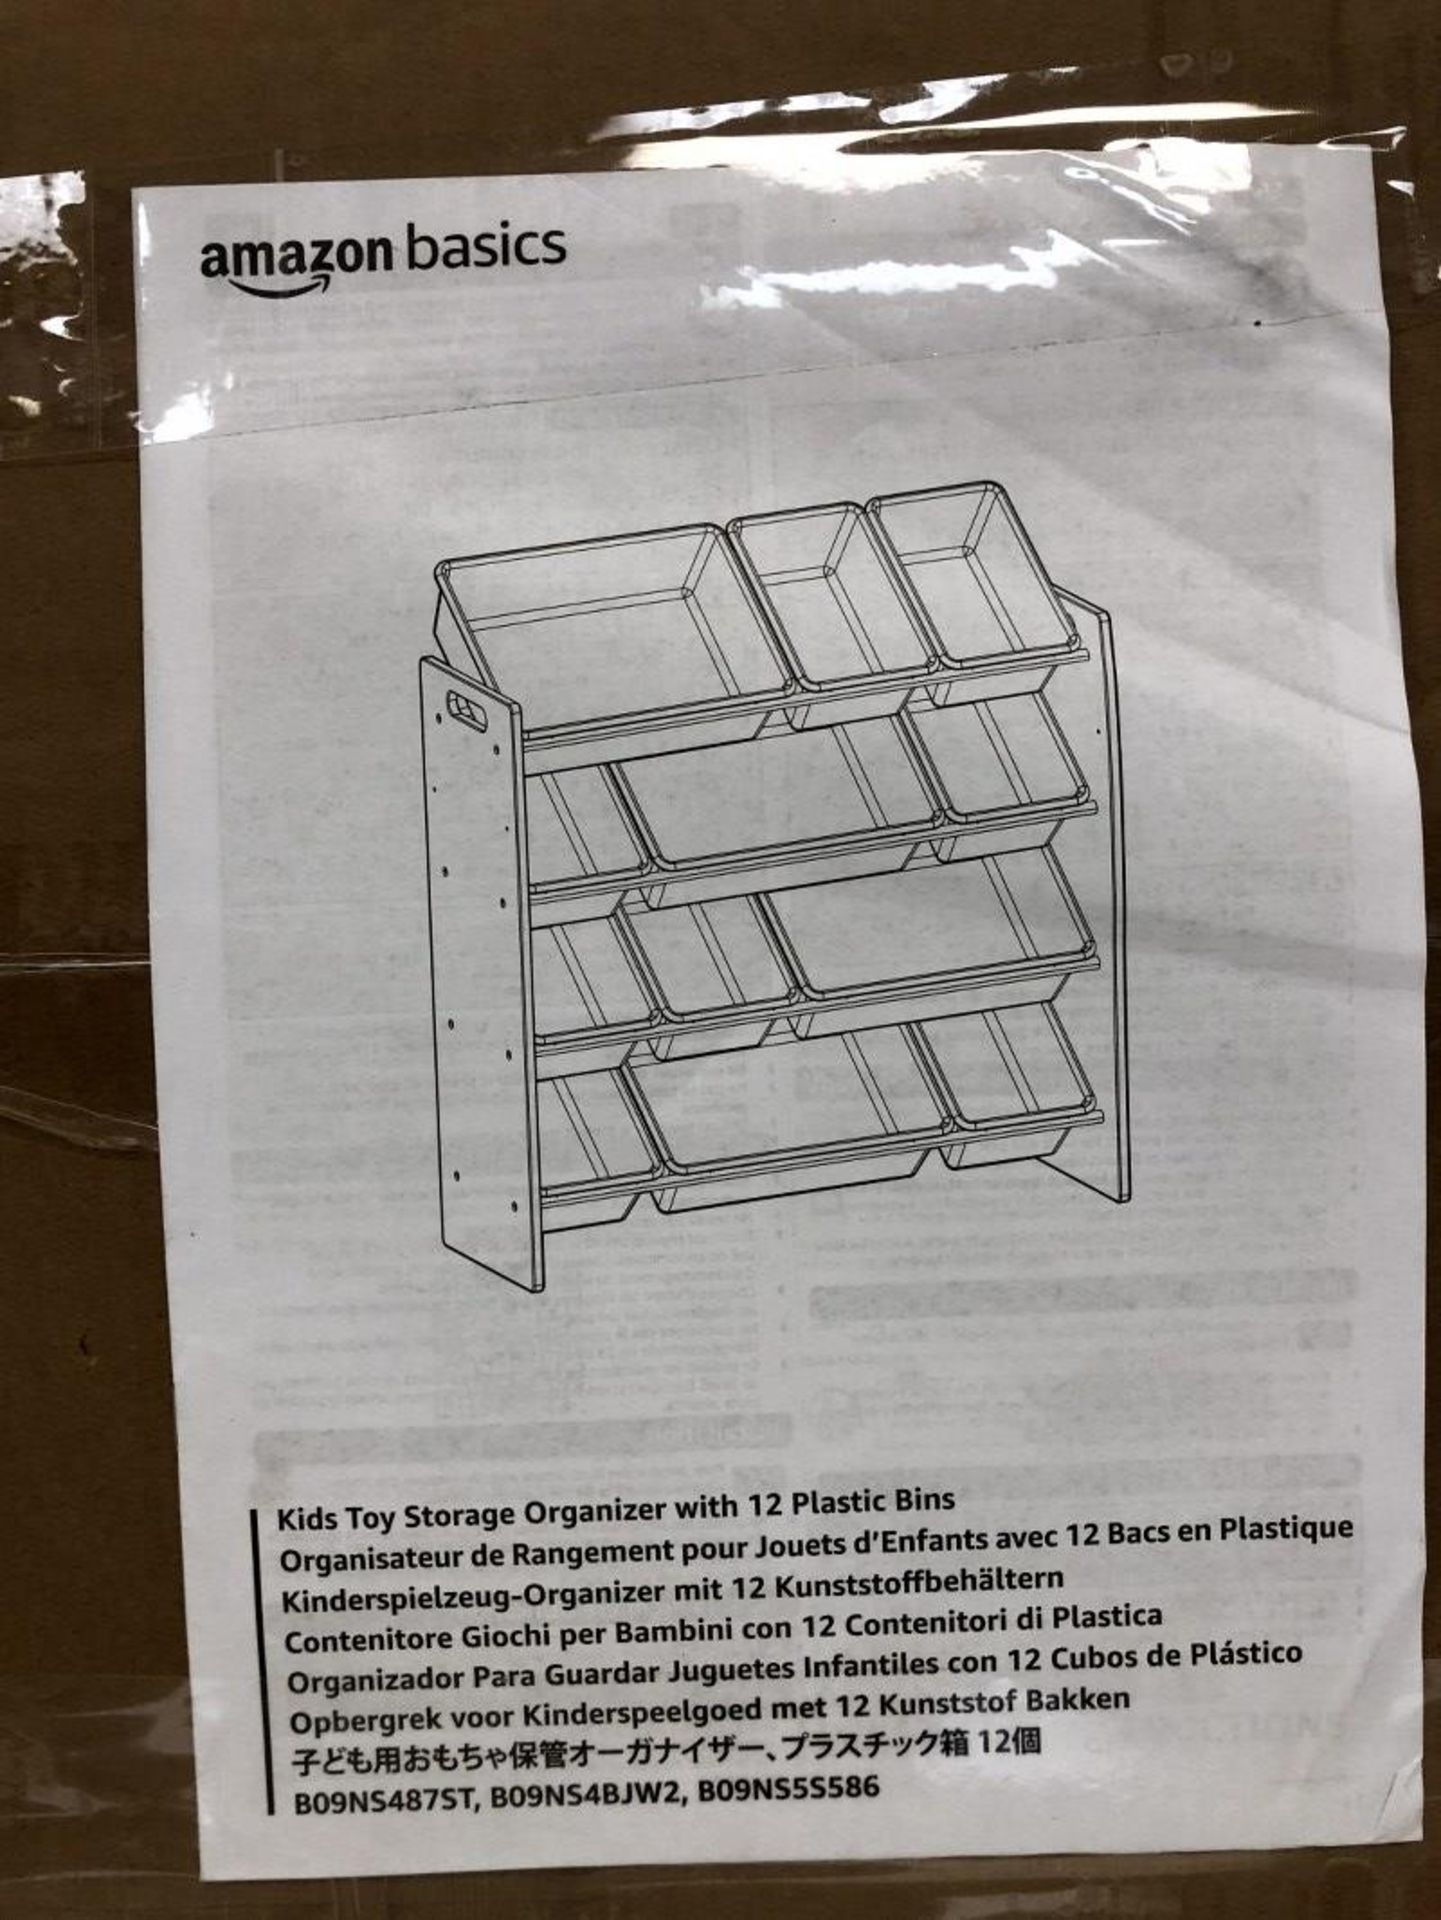 Amazon Basics - Kid'S Toy Storage Organizer - 12 Bins - Image 2 of 2